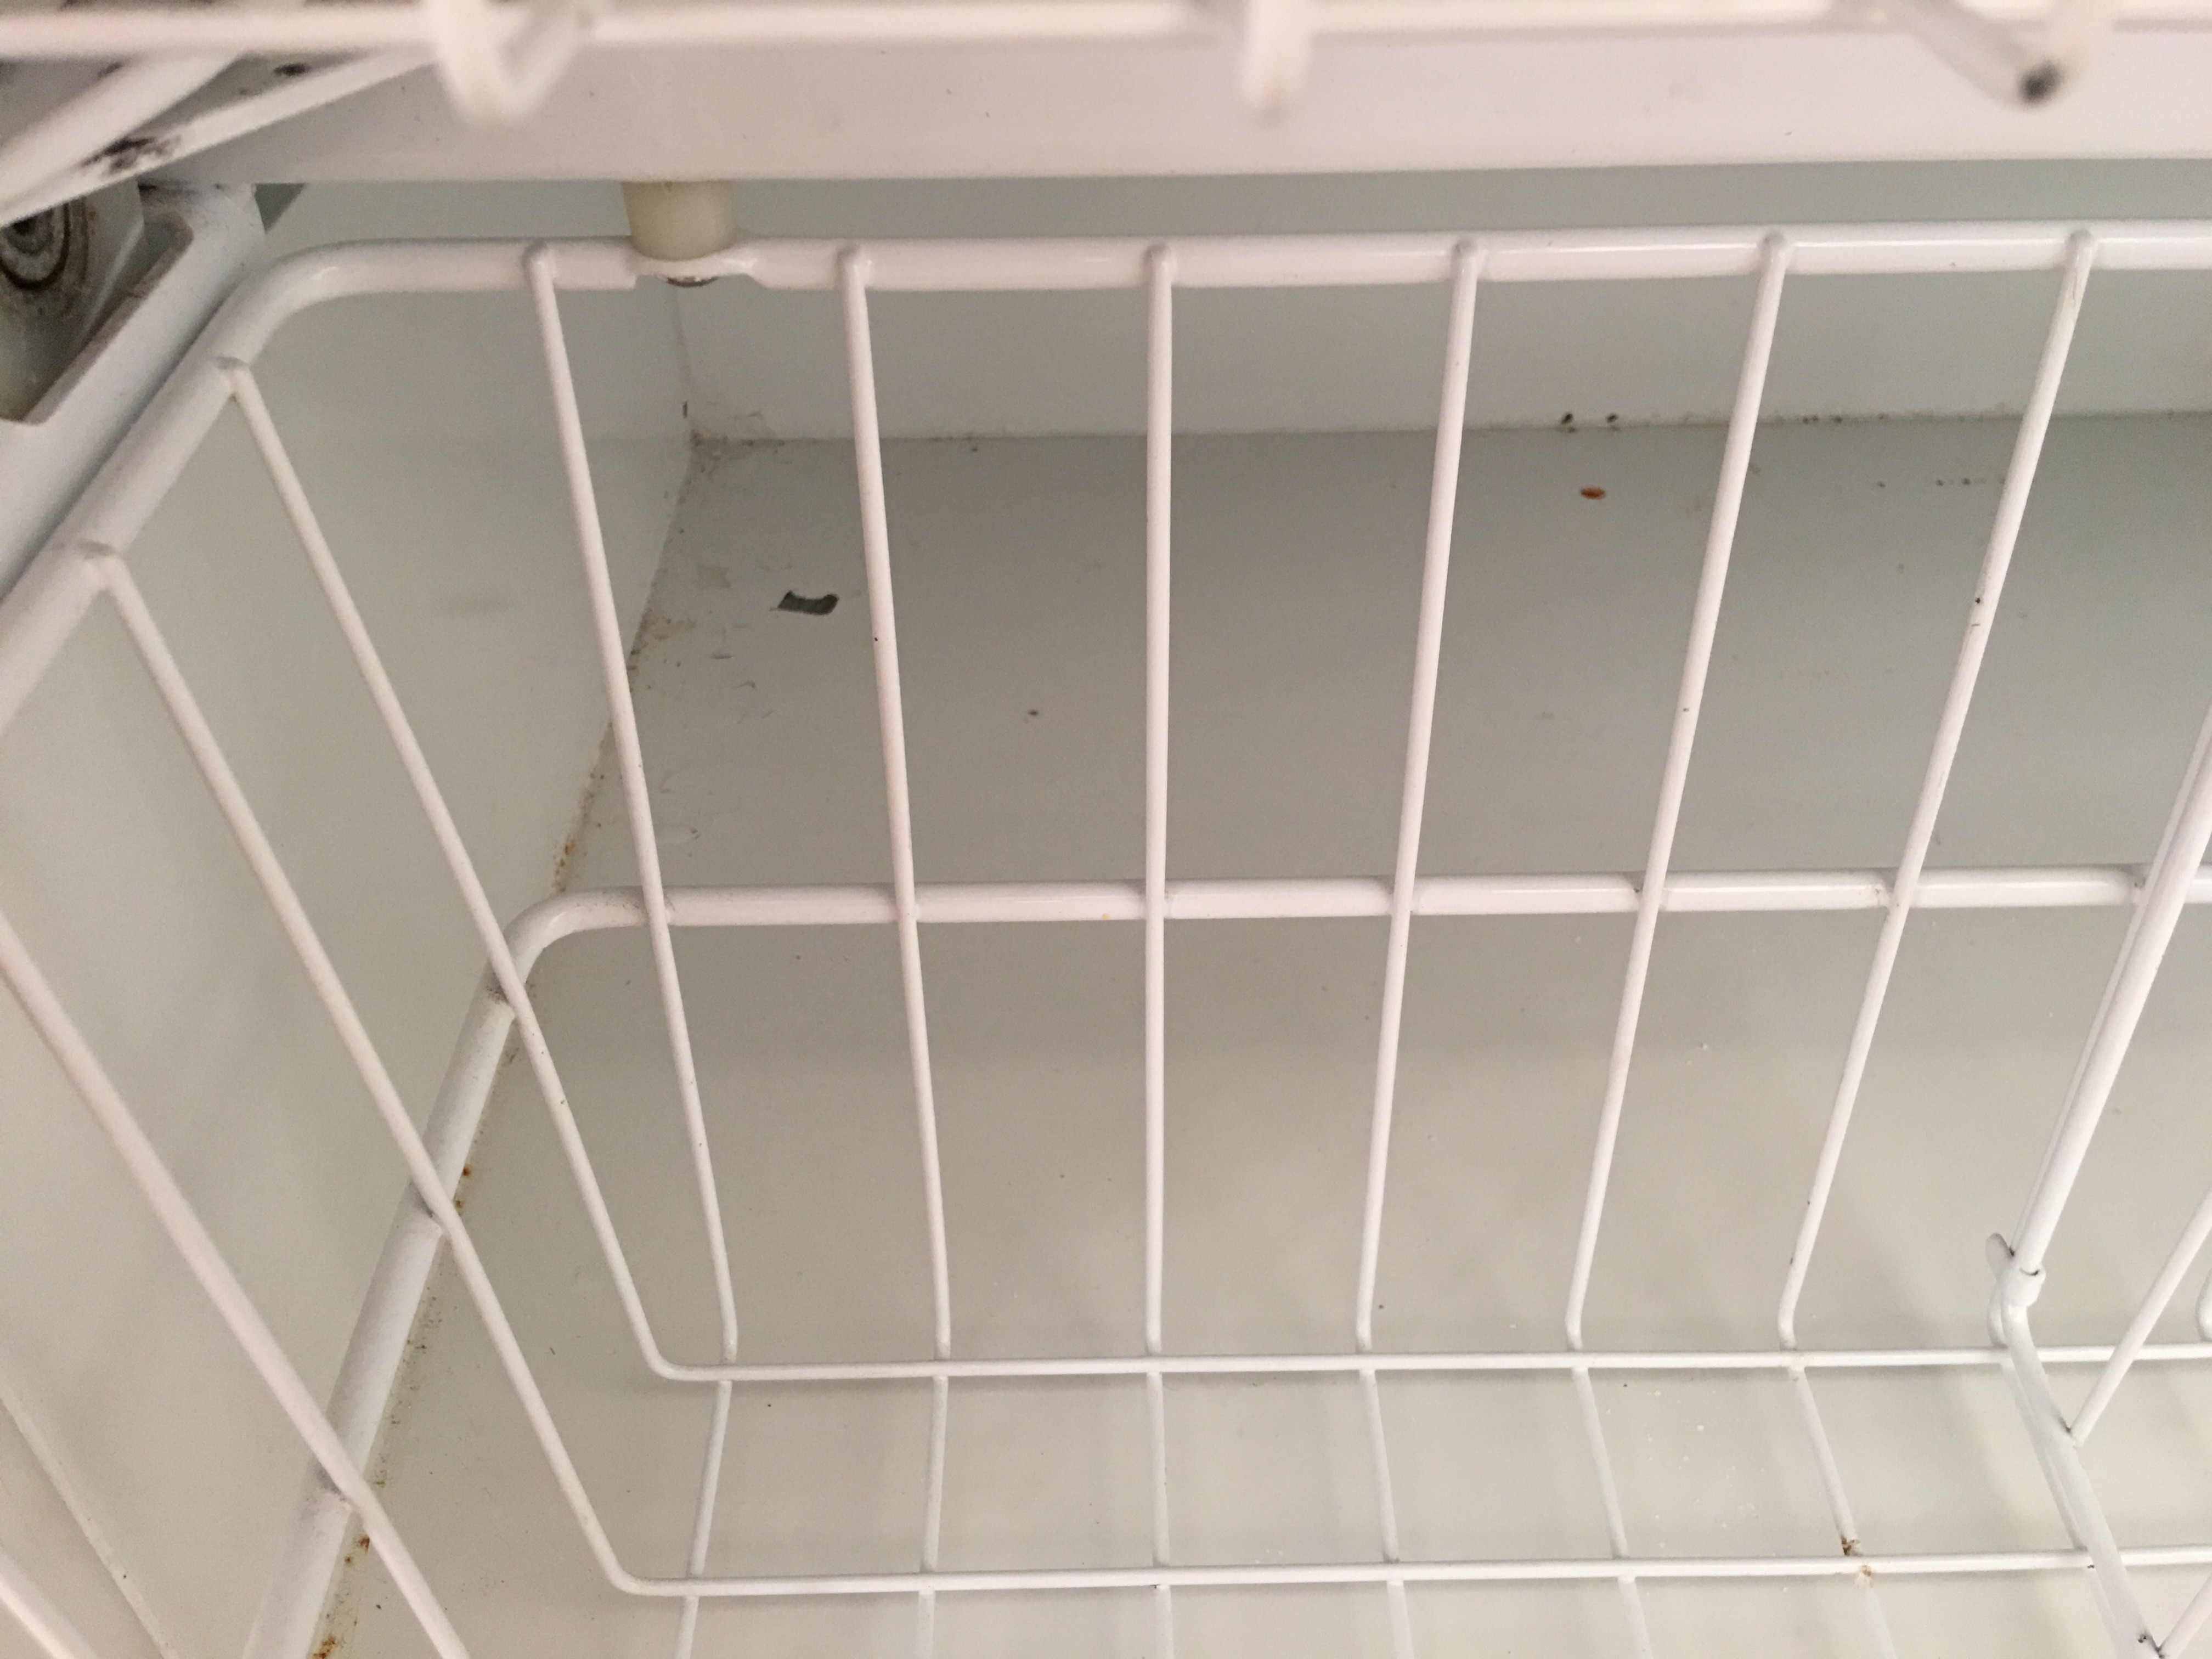 peeling paint in freezer compartment